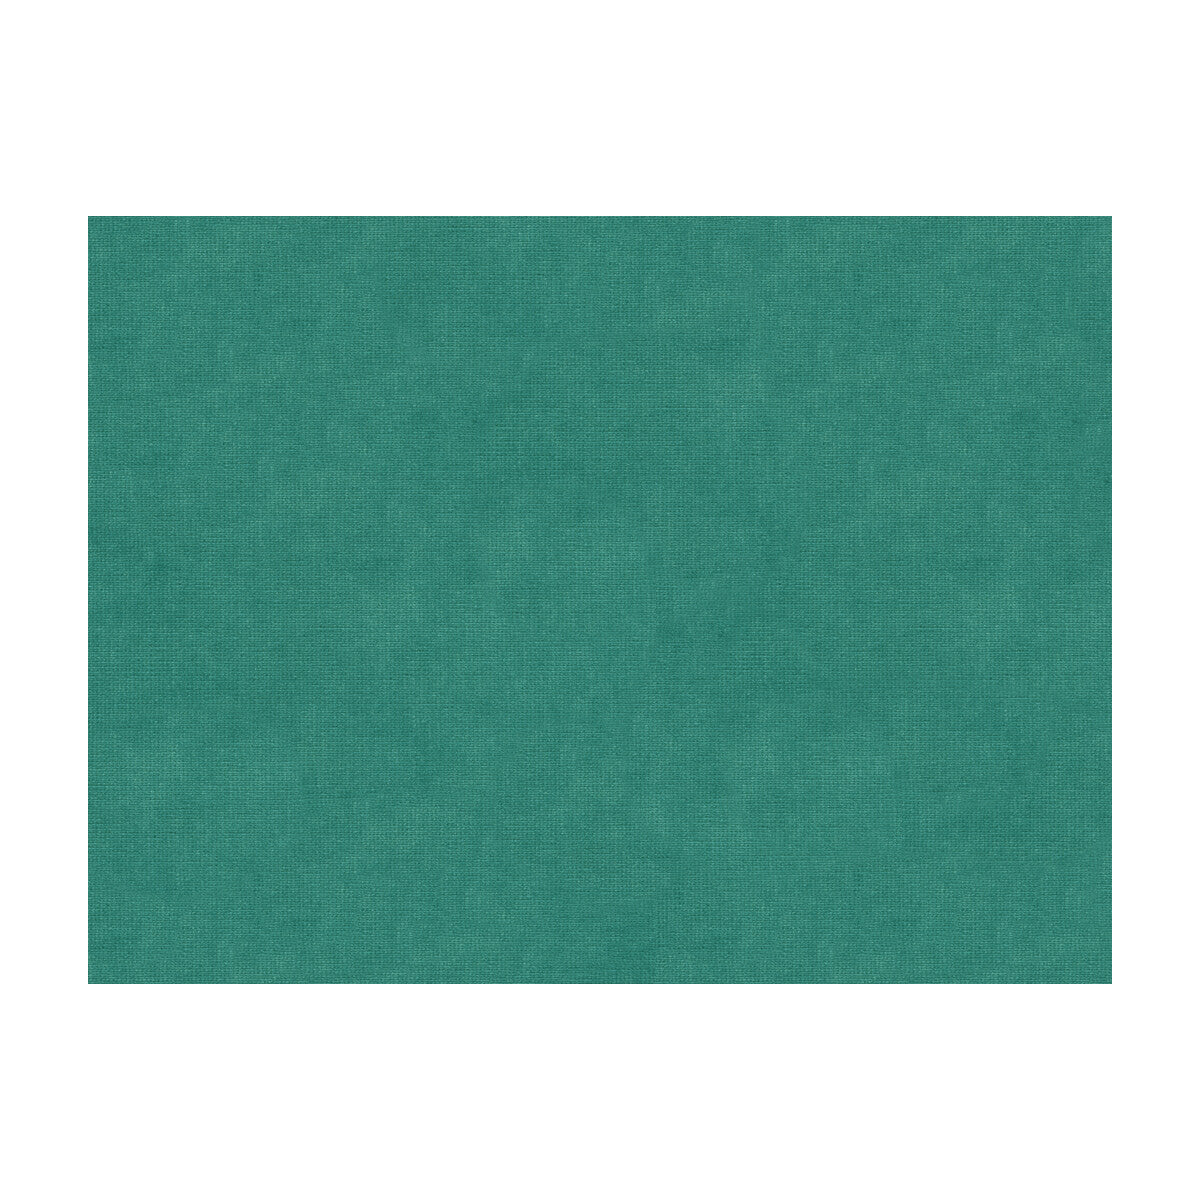 Charmant Velvet fabric in aquamarine color - pattern 8013150.113.0 - by Brunschwig &amp; Fils